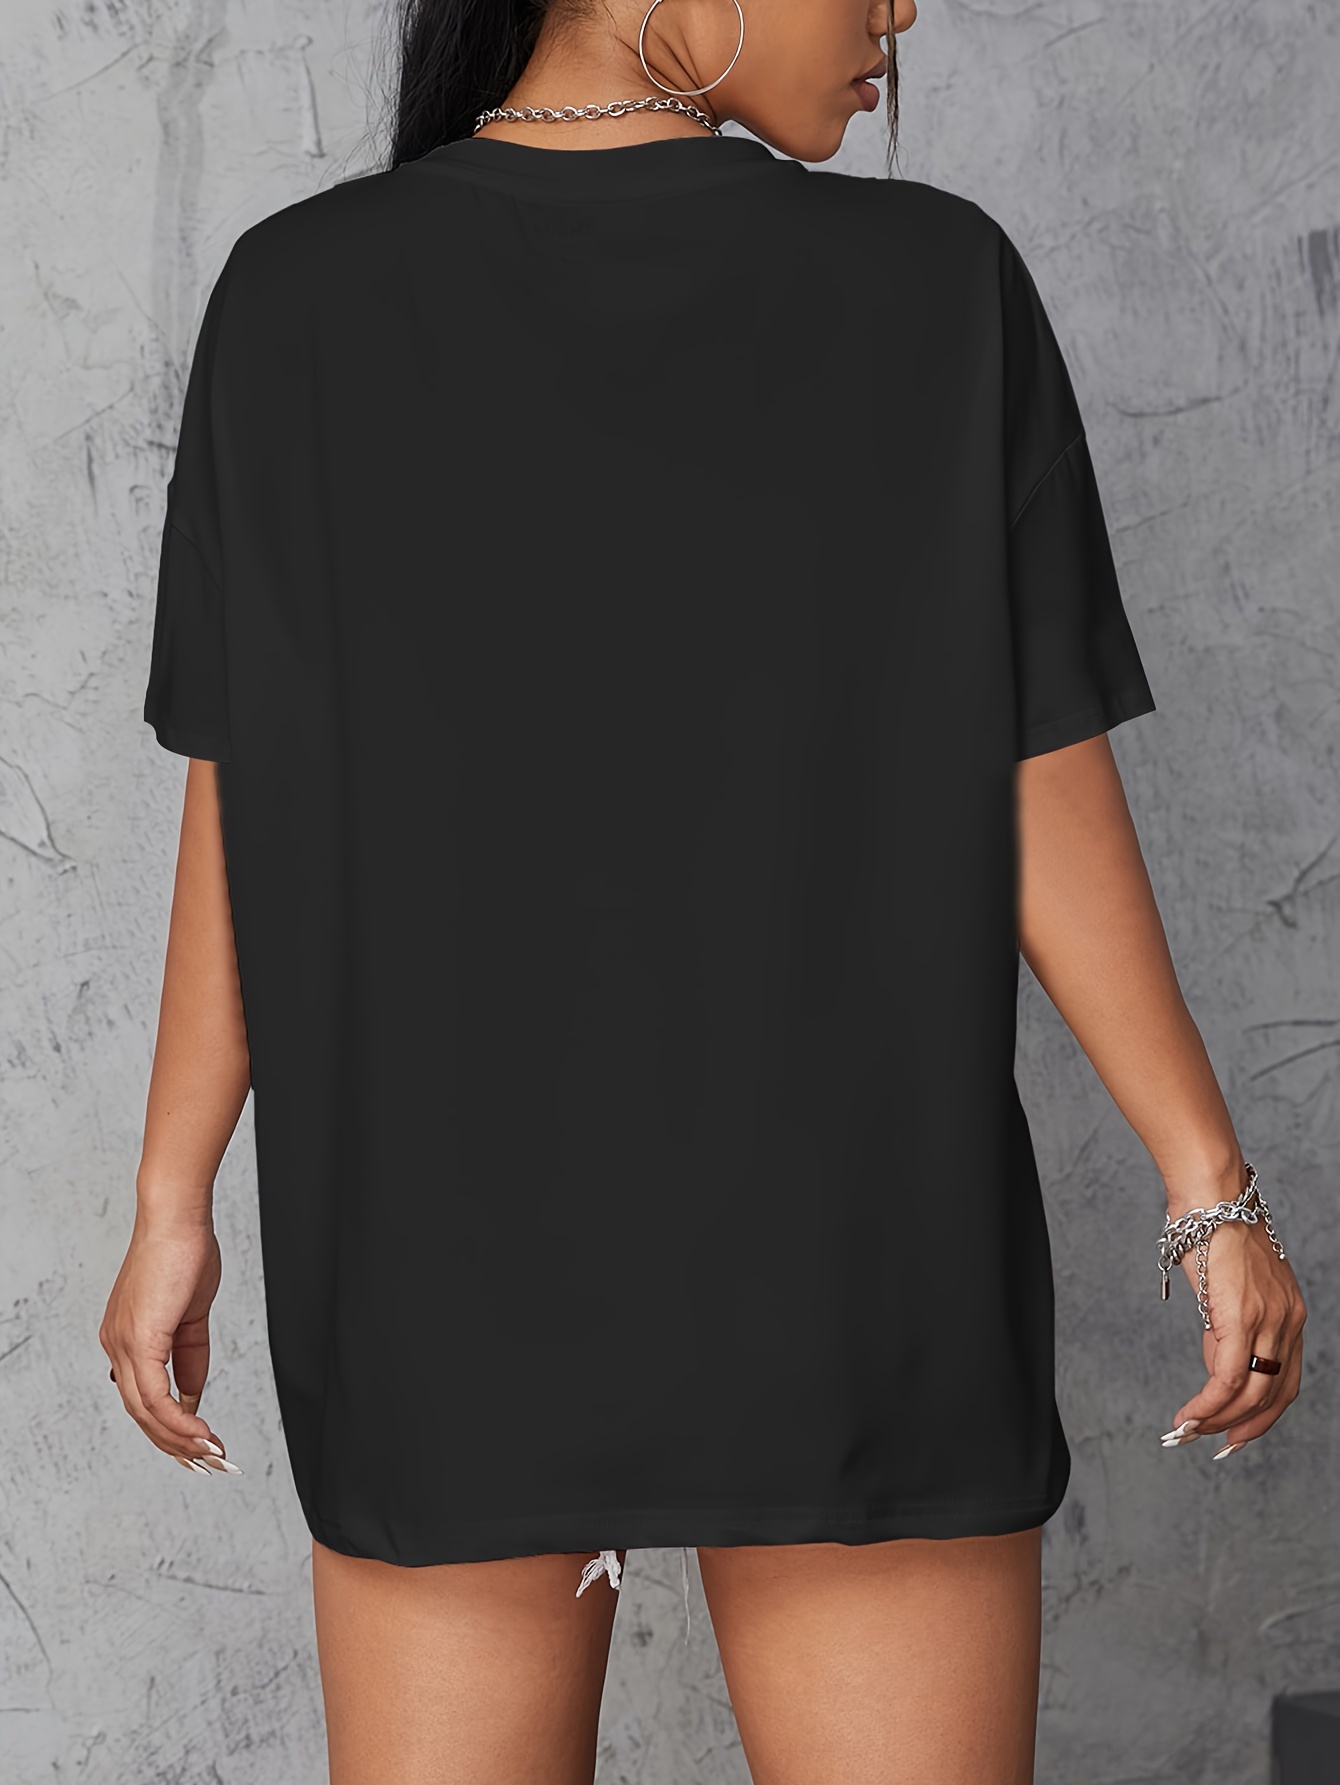 california 1998 print t shirt crew neck short sleeve t shirt casual sport tops womens clothing details 1